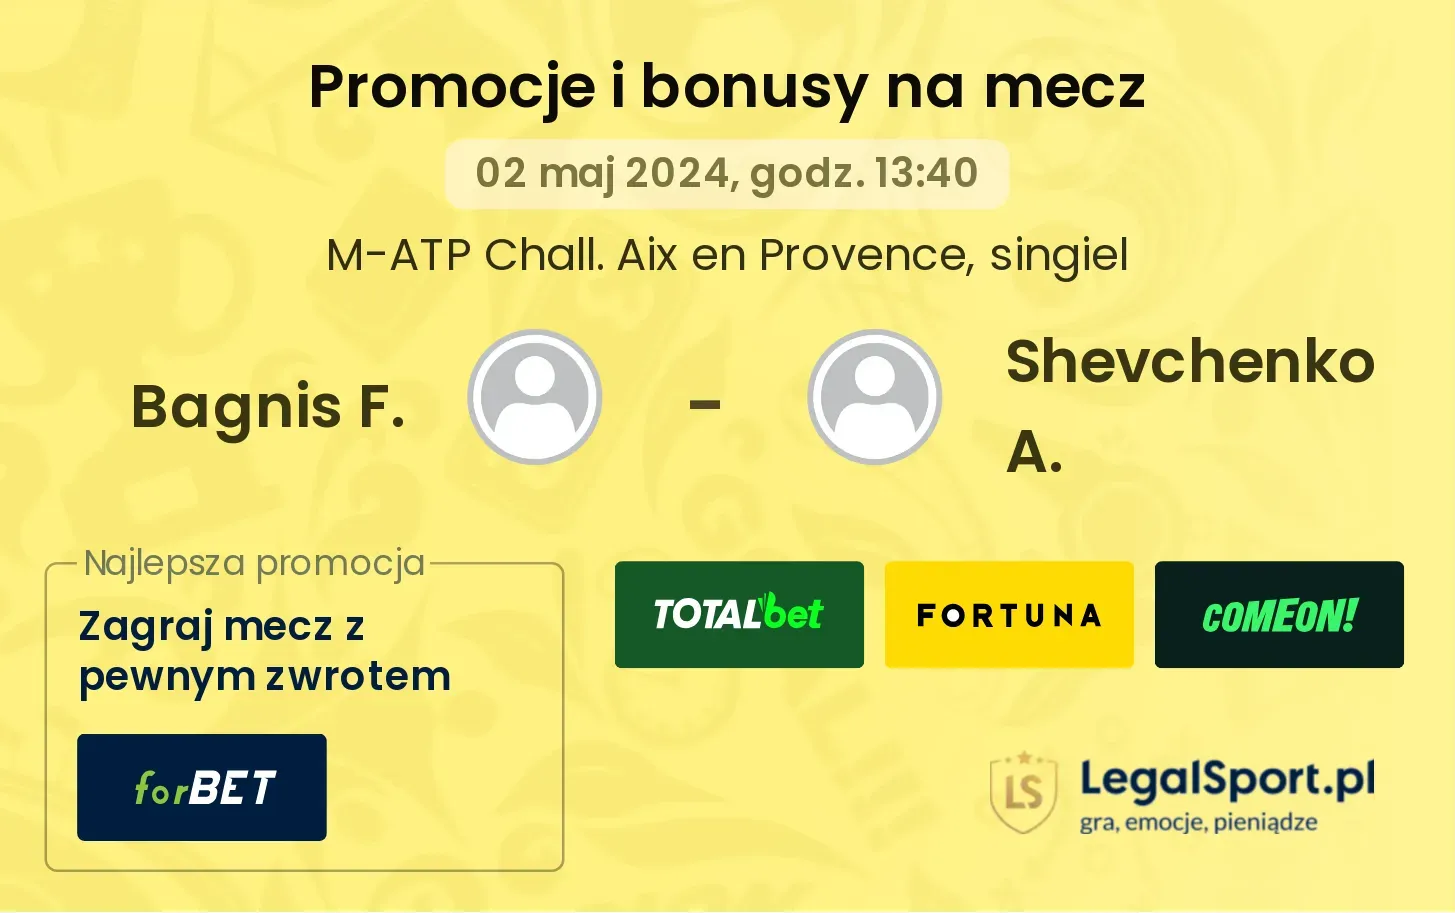 Bagnis F. - Shevchenko A. promocje bonusy na mecz